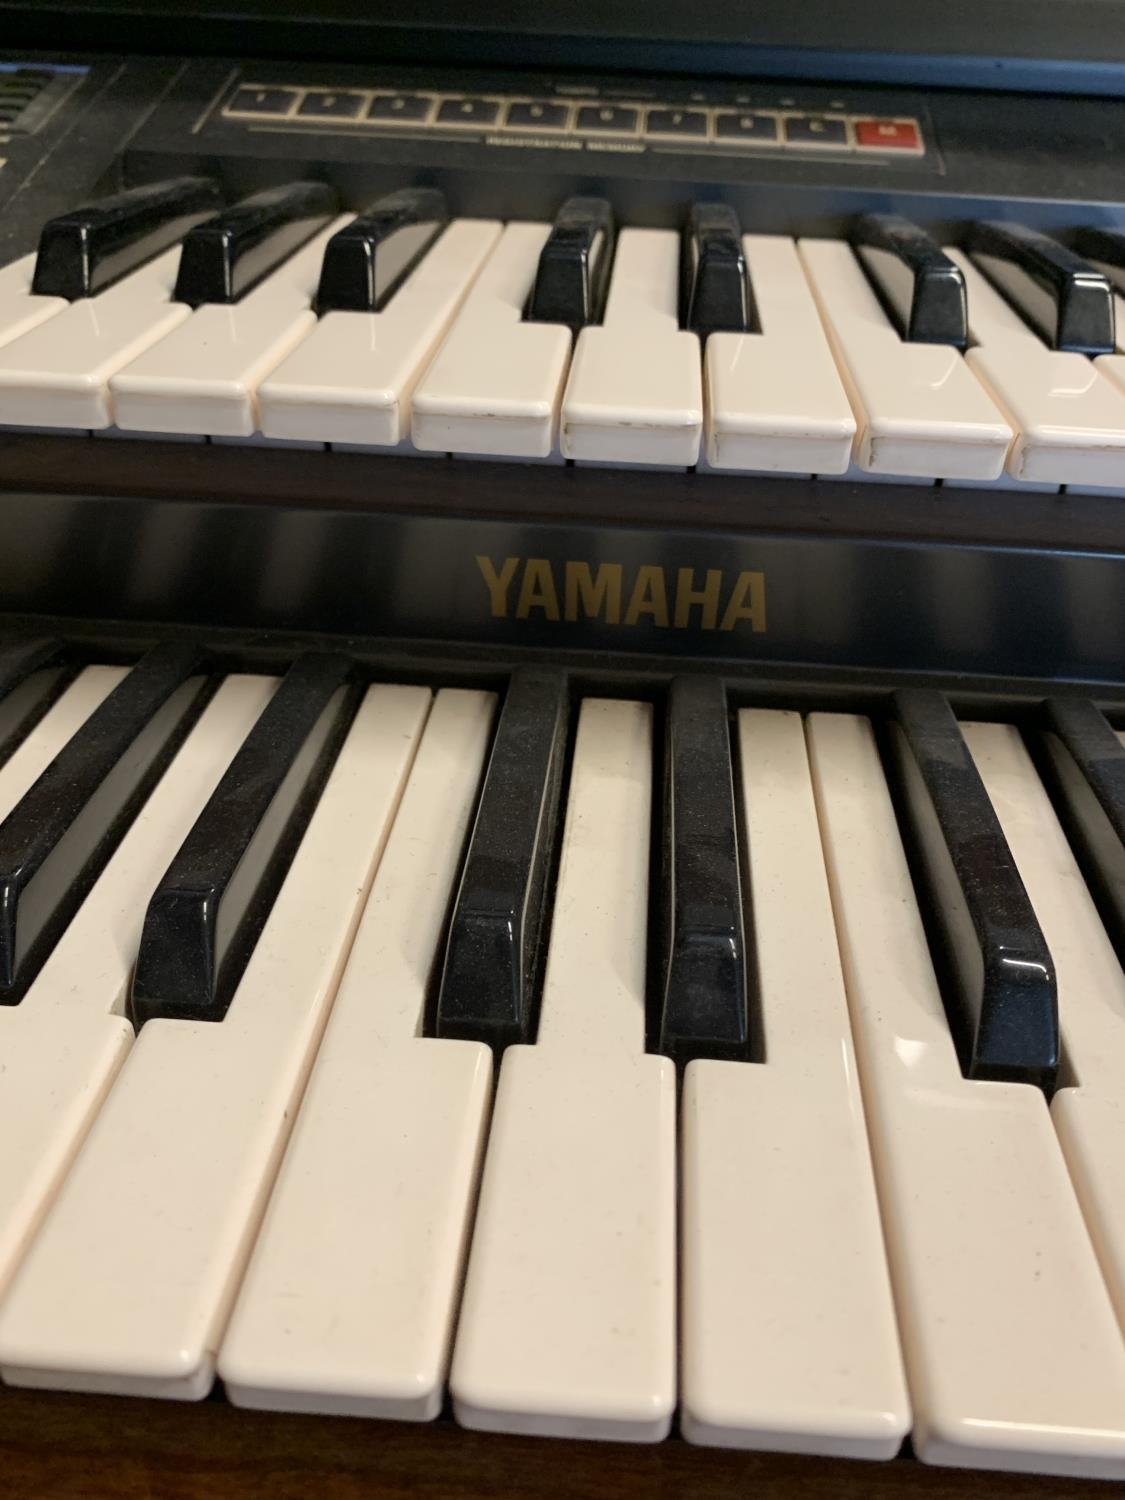 A Yamaha Electone organ, 108cm x 90cm x 45cm - Image 3 of 4